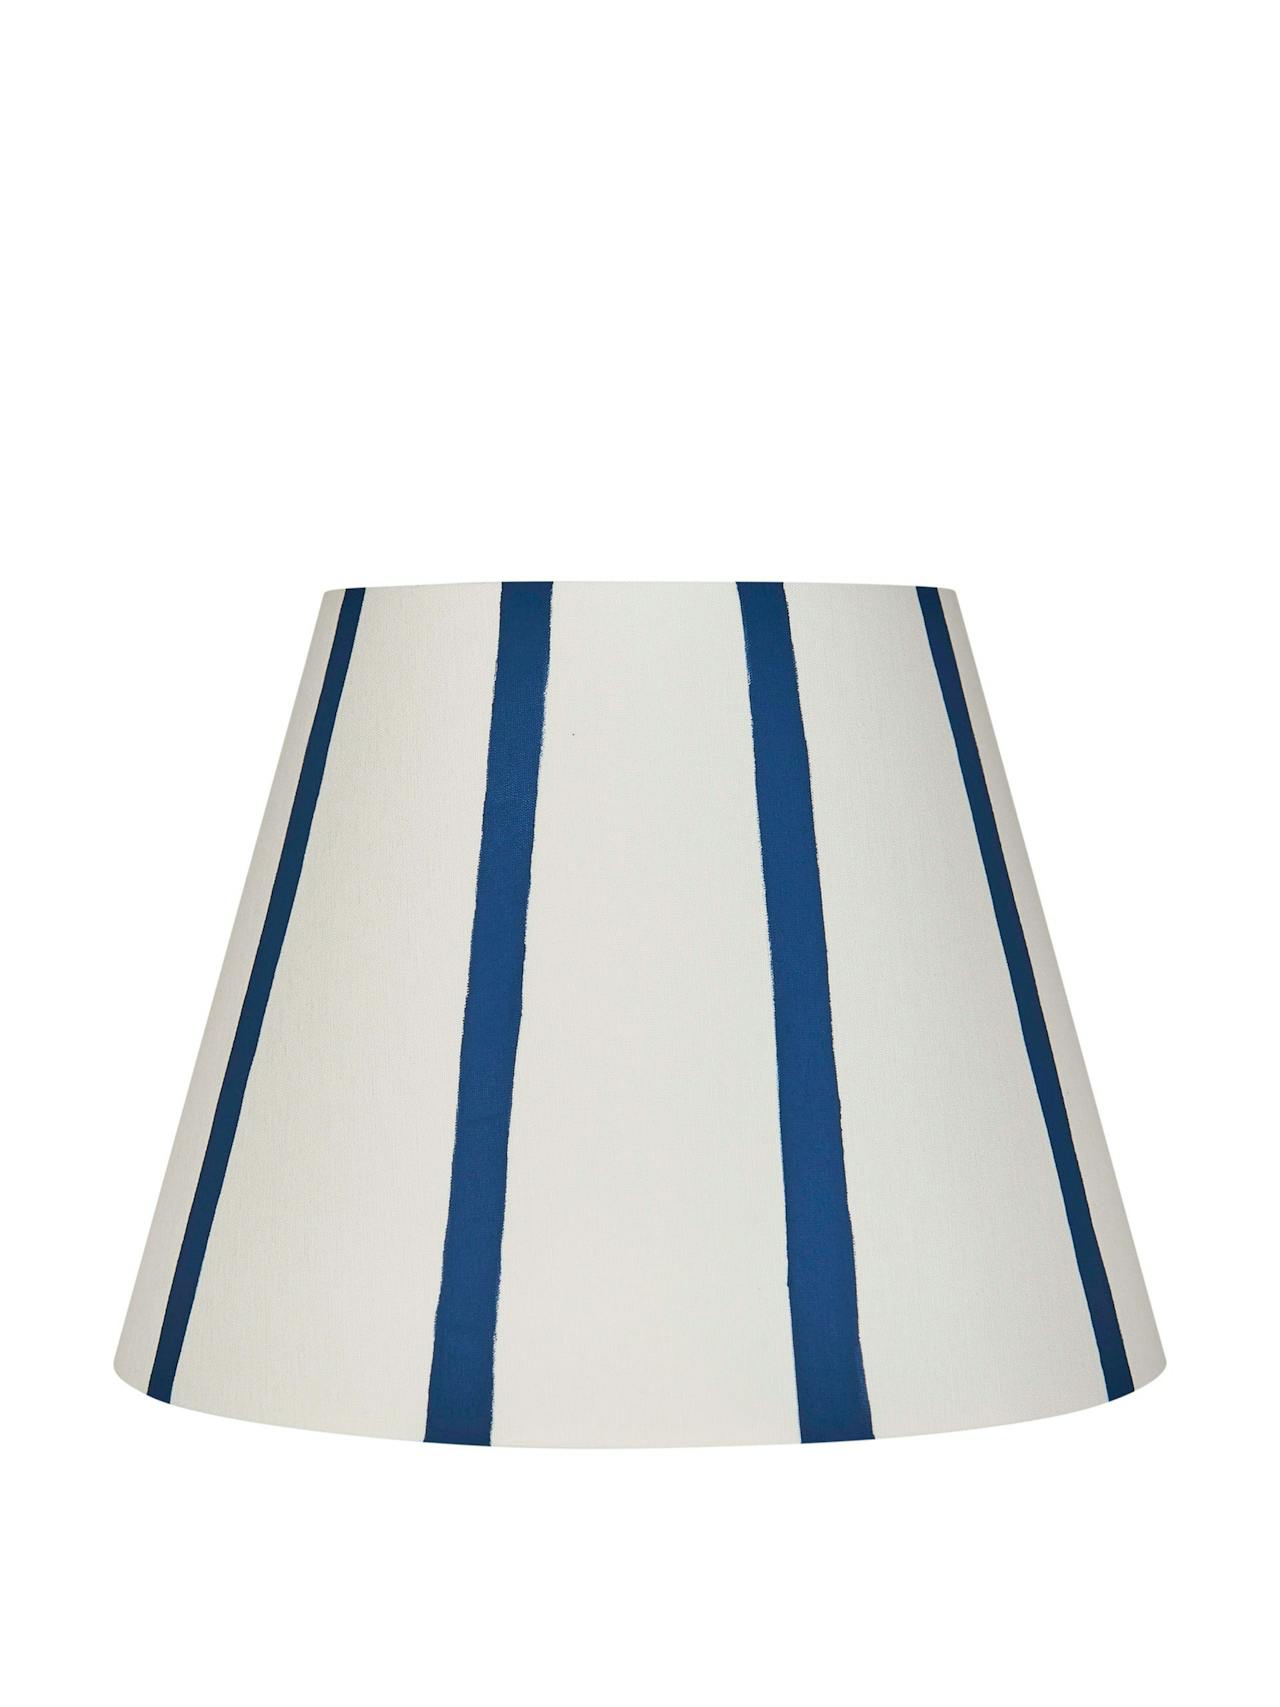 Dark blue stripe lampshade